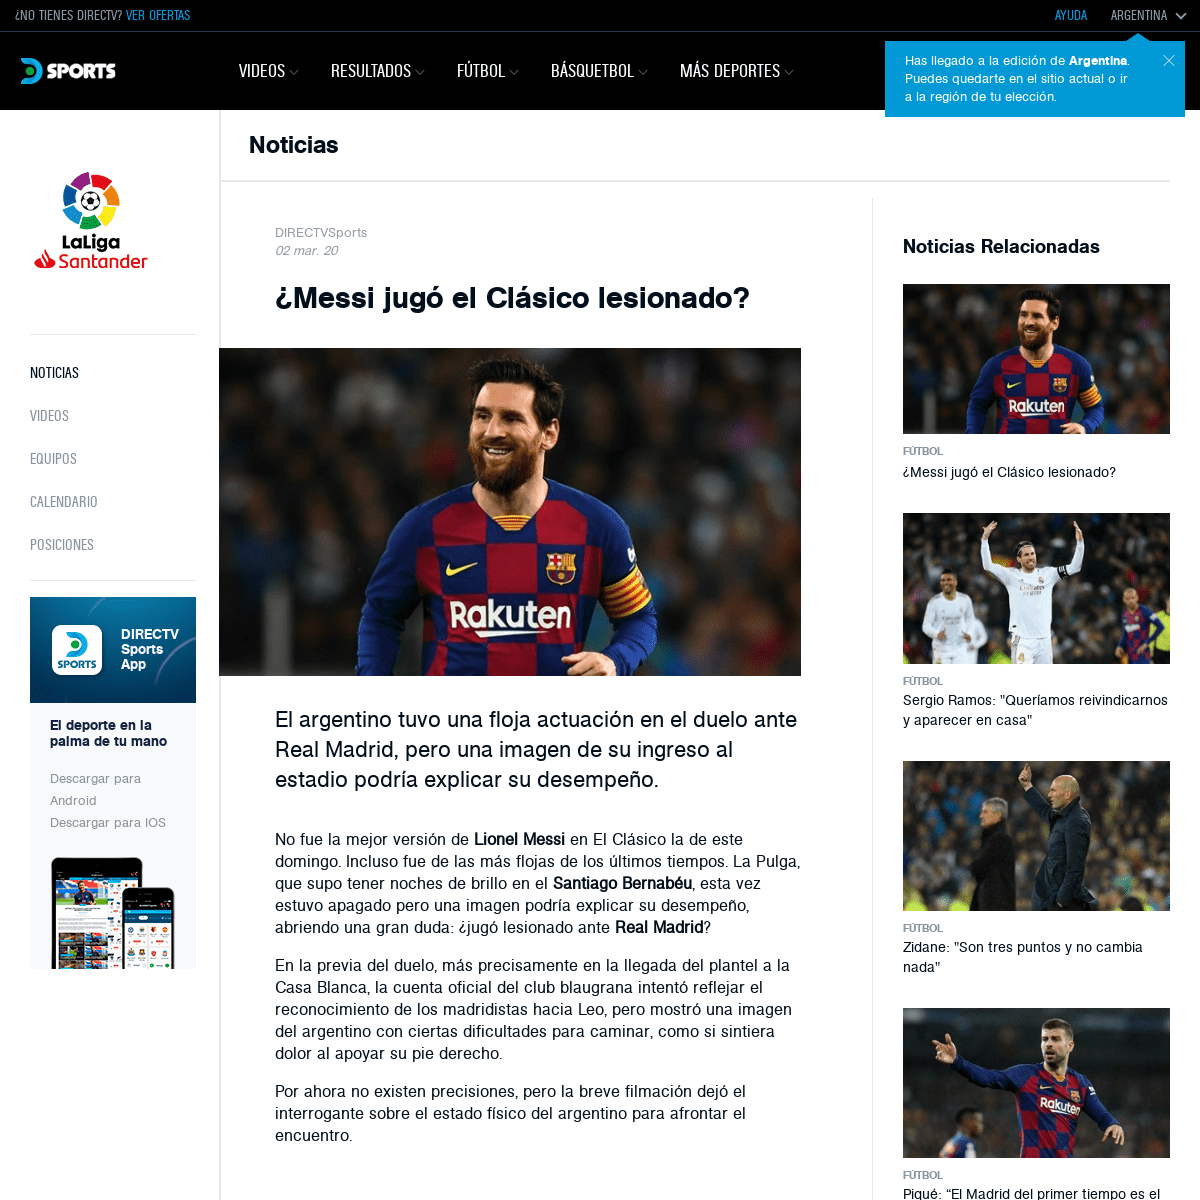 A complete backup of www.directvsports.com/futbol/espana/la-liga/noticias/messi-jugo-clasico-lesionado